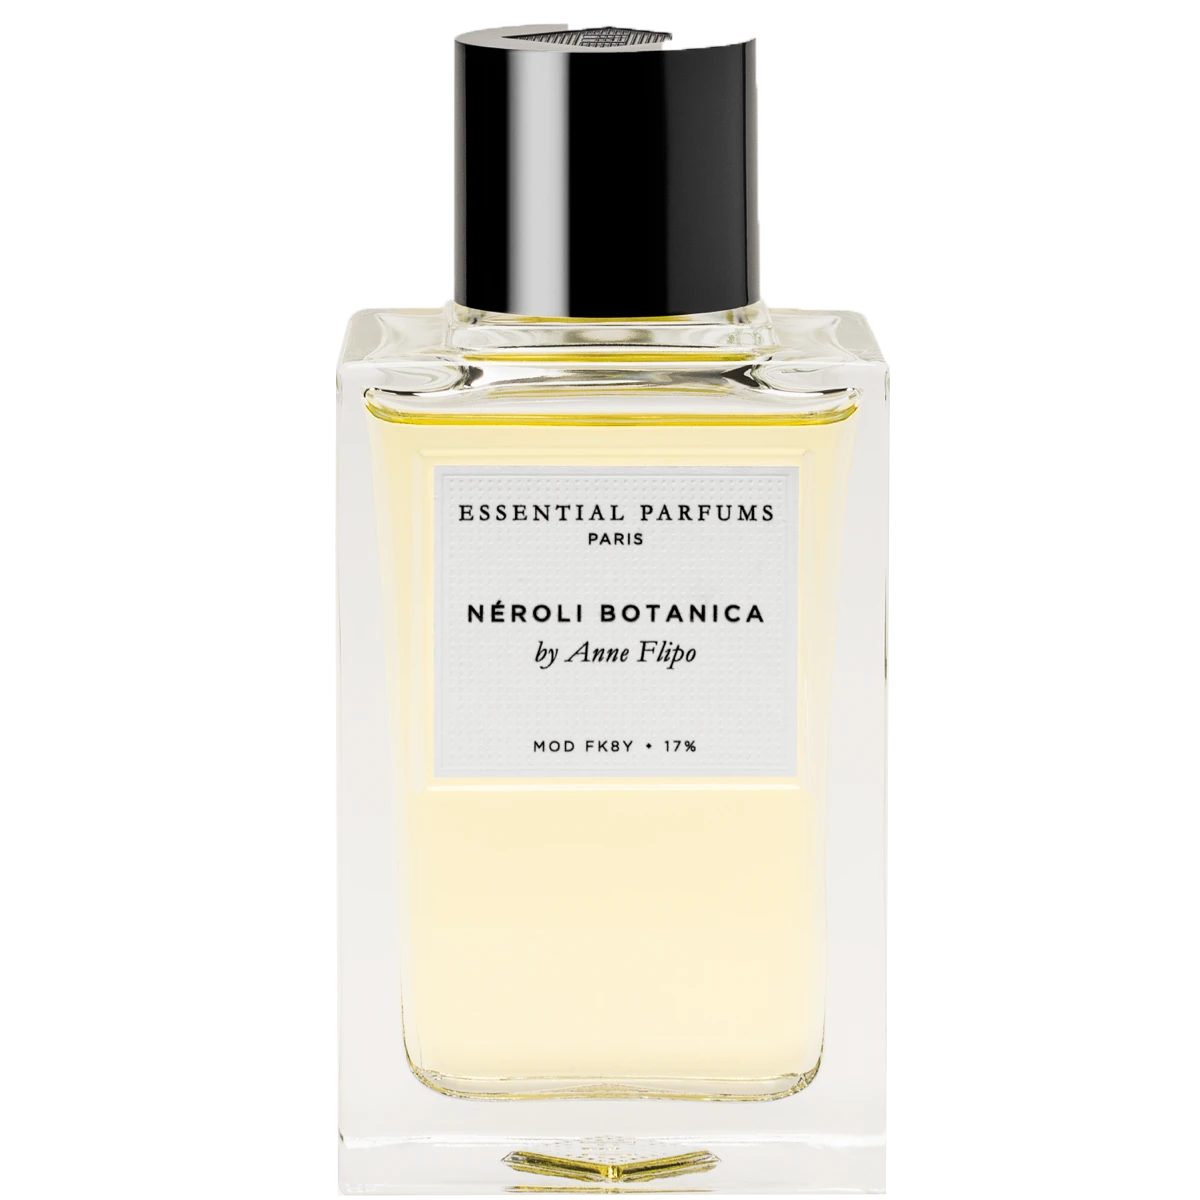 Neroli Botanica Eau de parfum 100ml - Essential Parfums